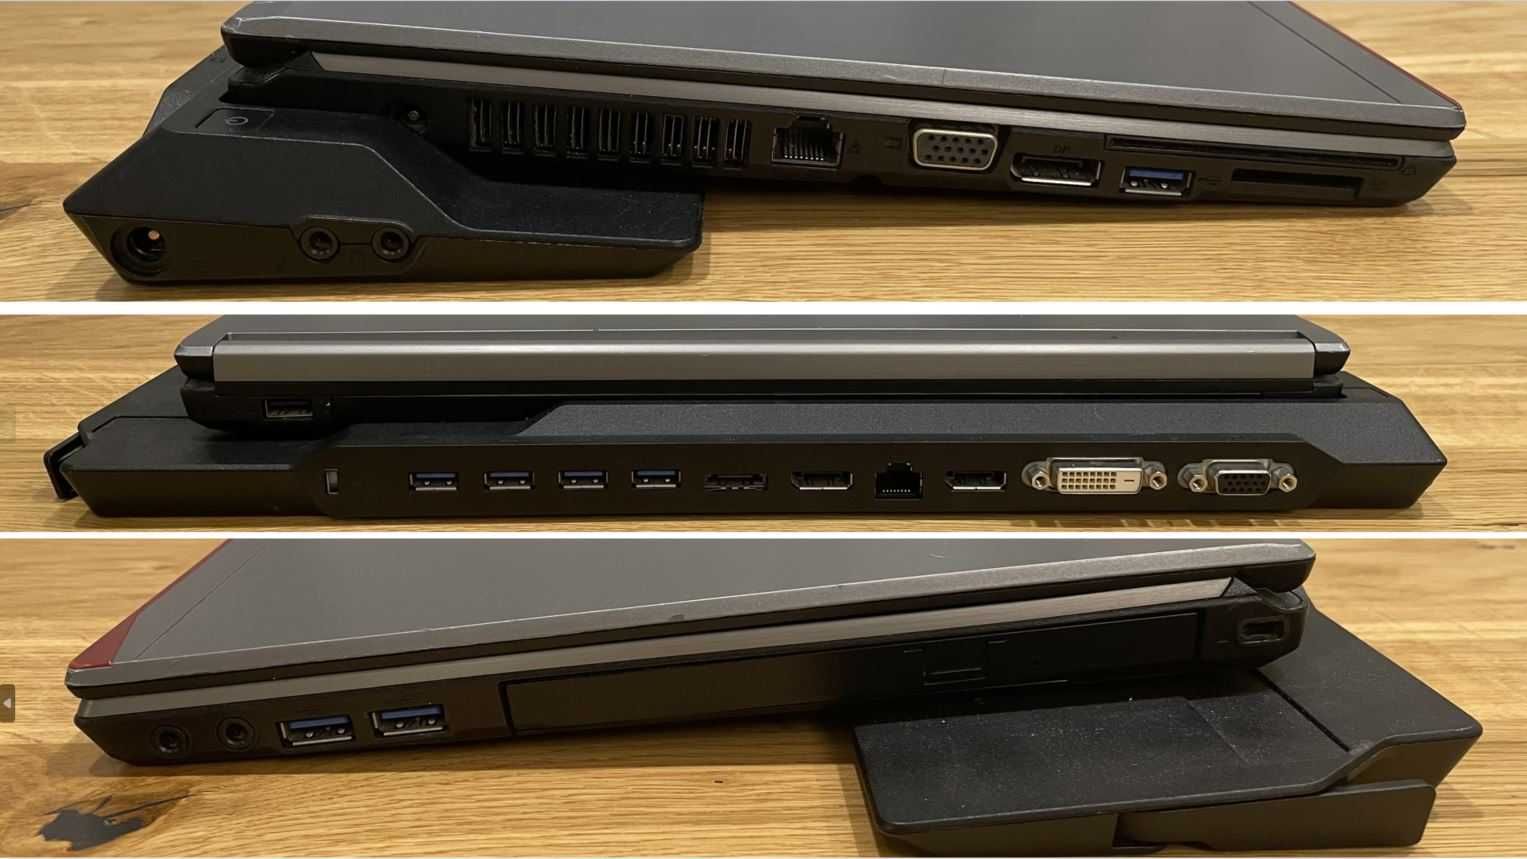 Laptop Fujitsu Lifebook E744 (DVD, Proc i5-4300M, RAM 8GB, SSD 128G)